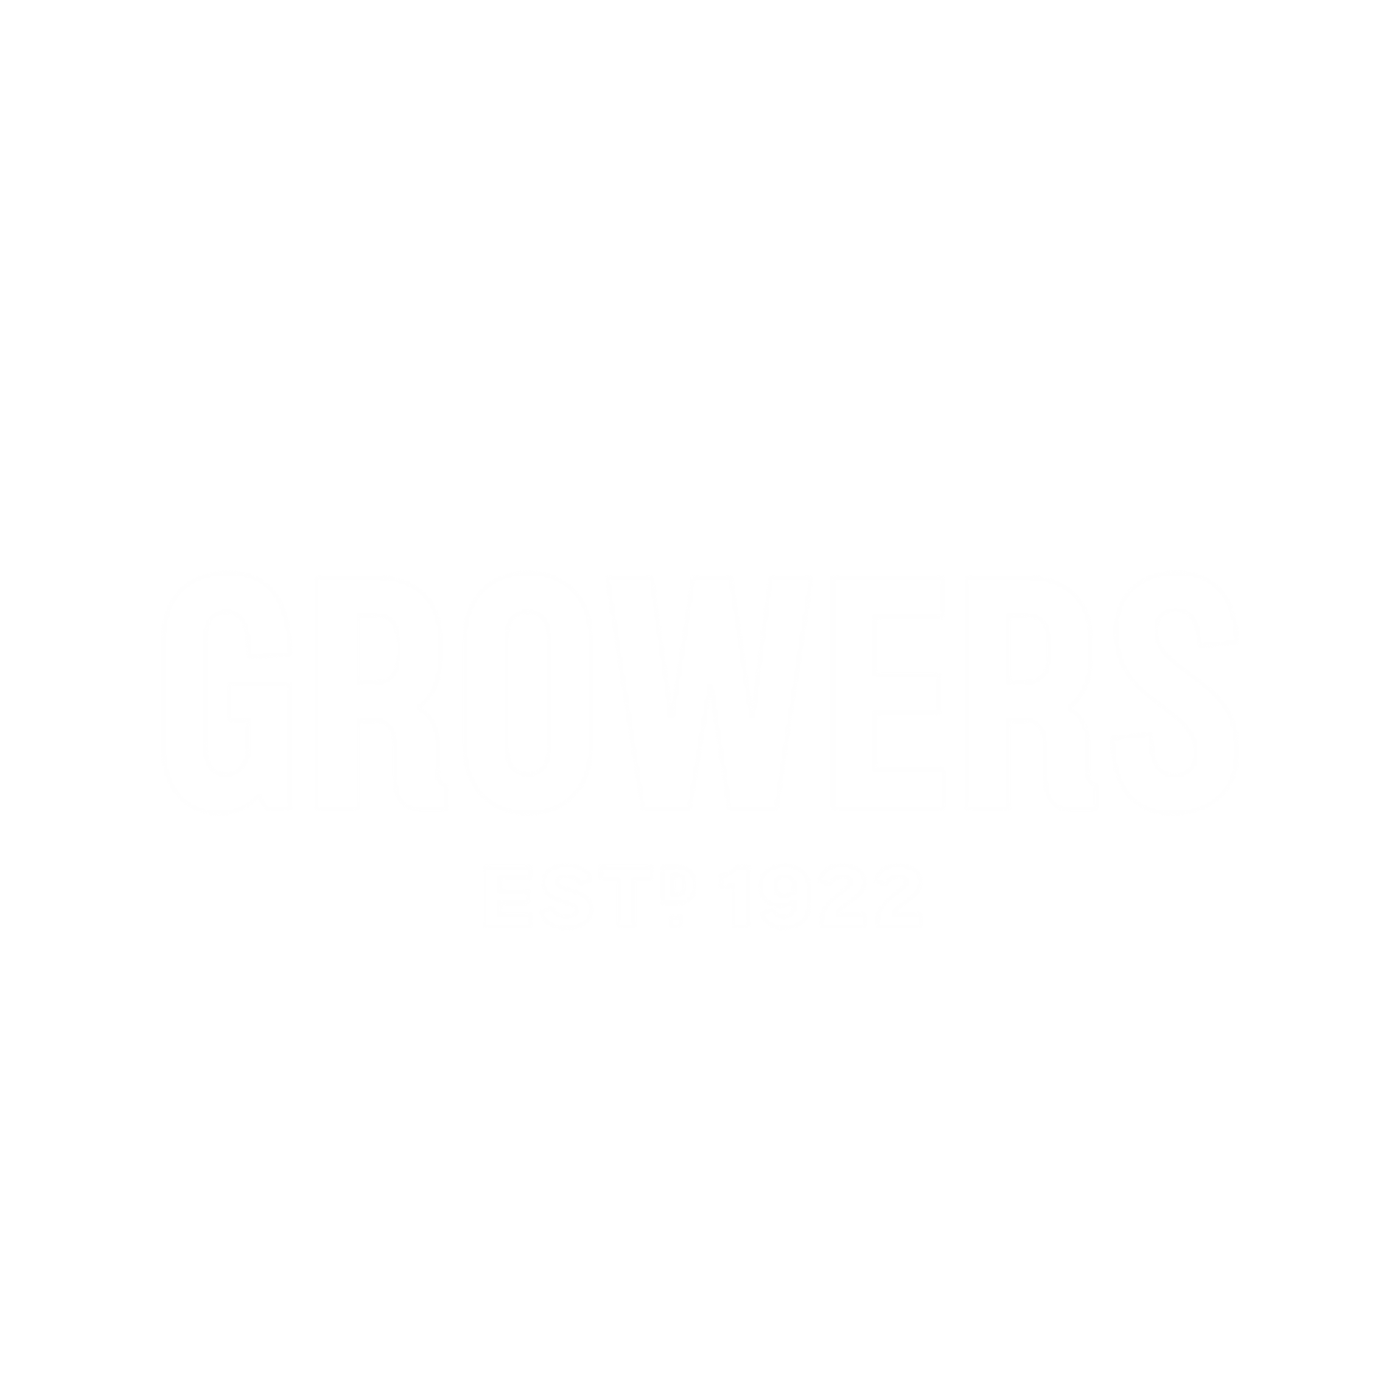 Growers logo